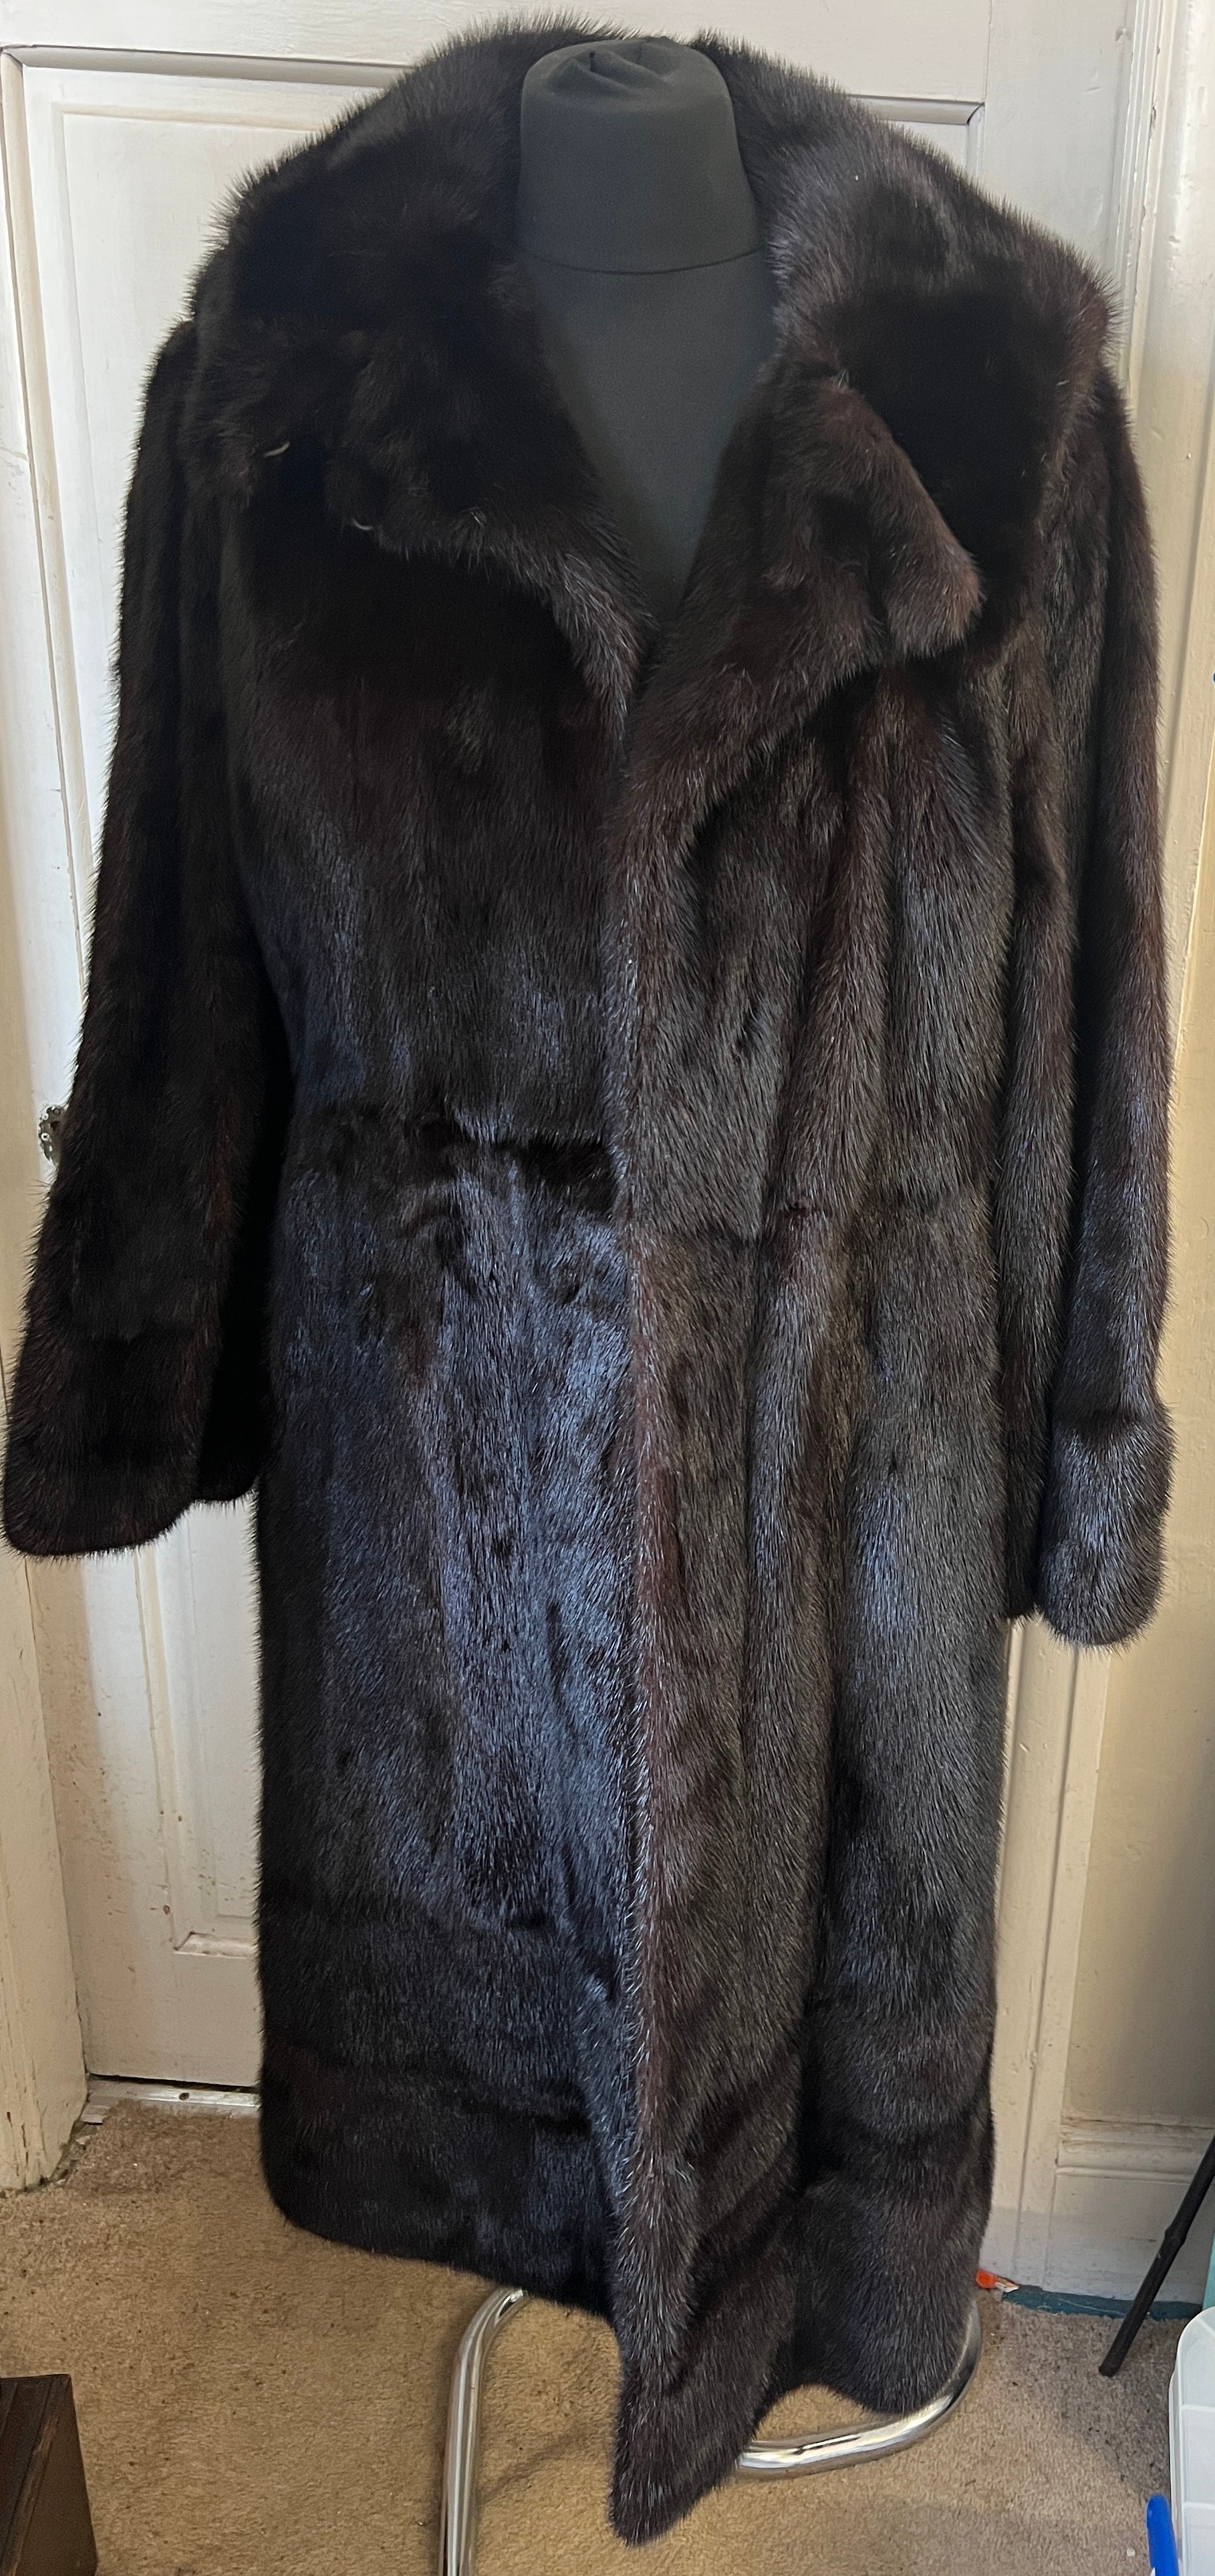 A dark brown long mink coat together with two dark brown mink cuffs.